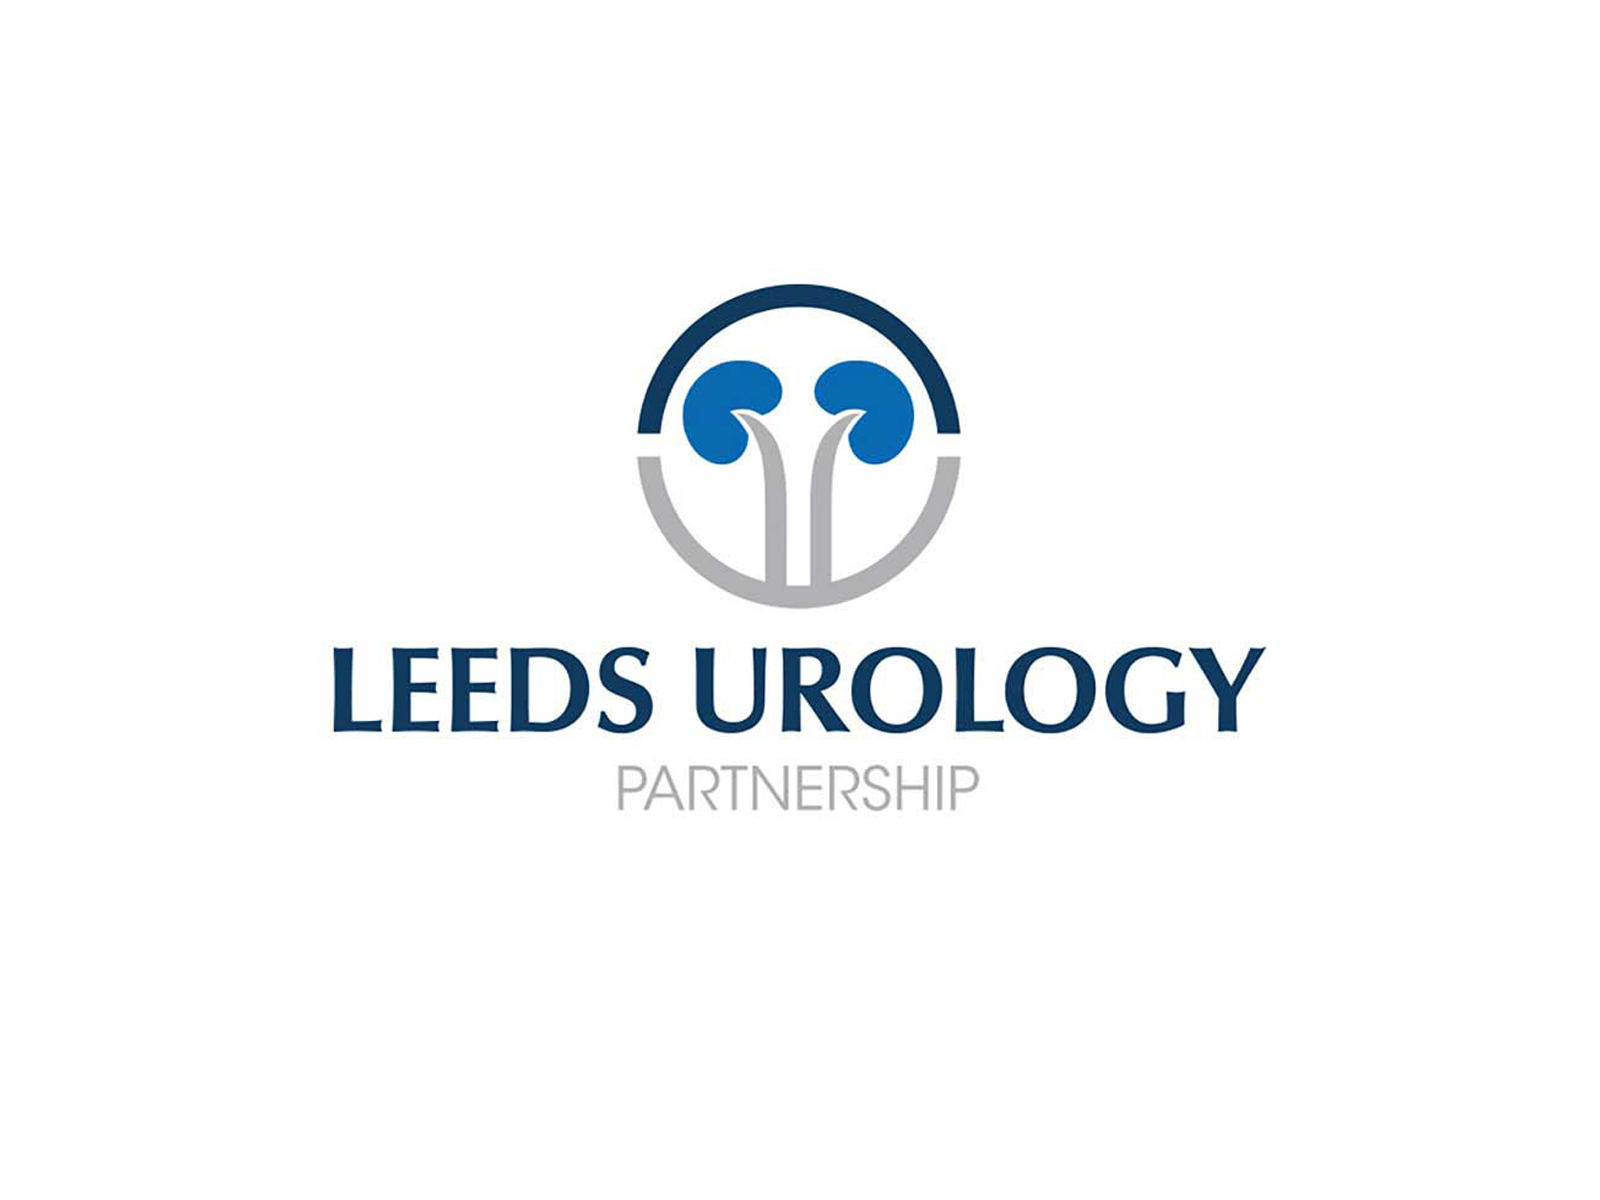 Kidney logo urology template Royalty Free Vector Image